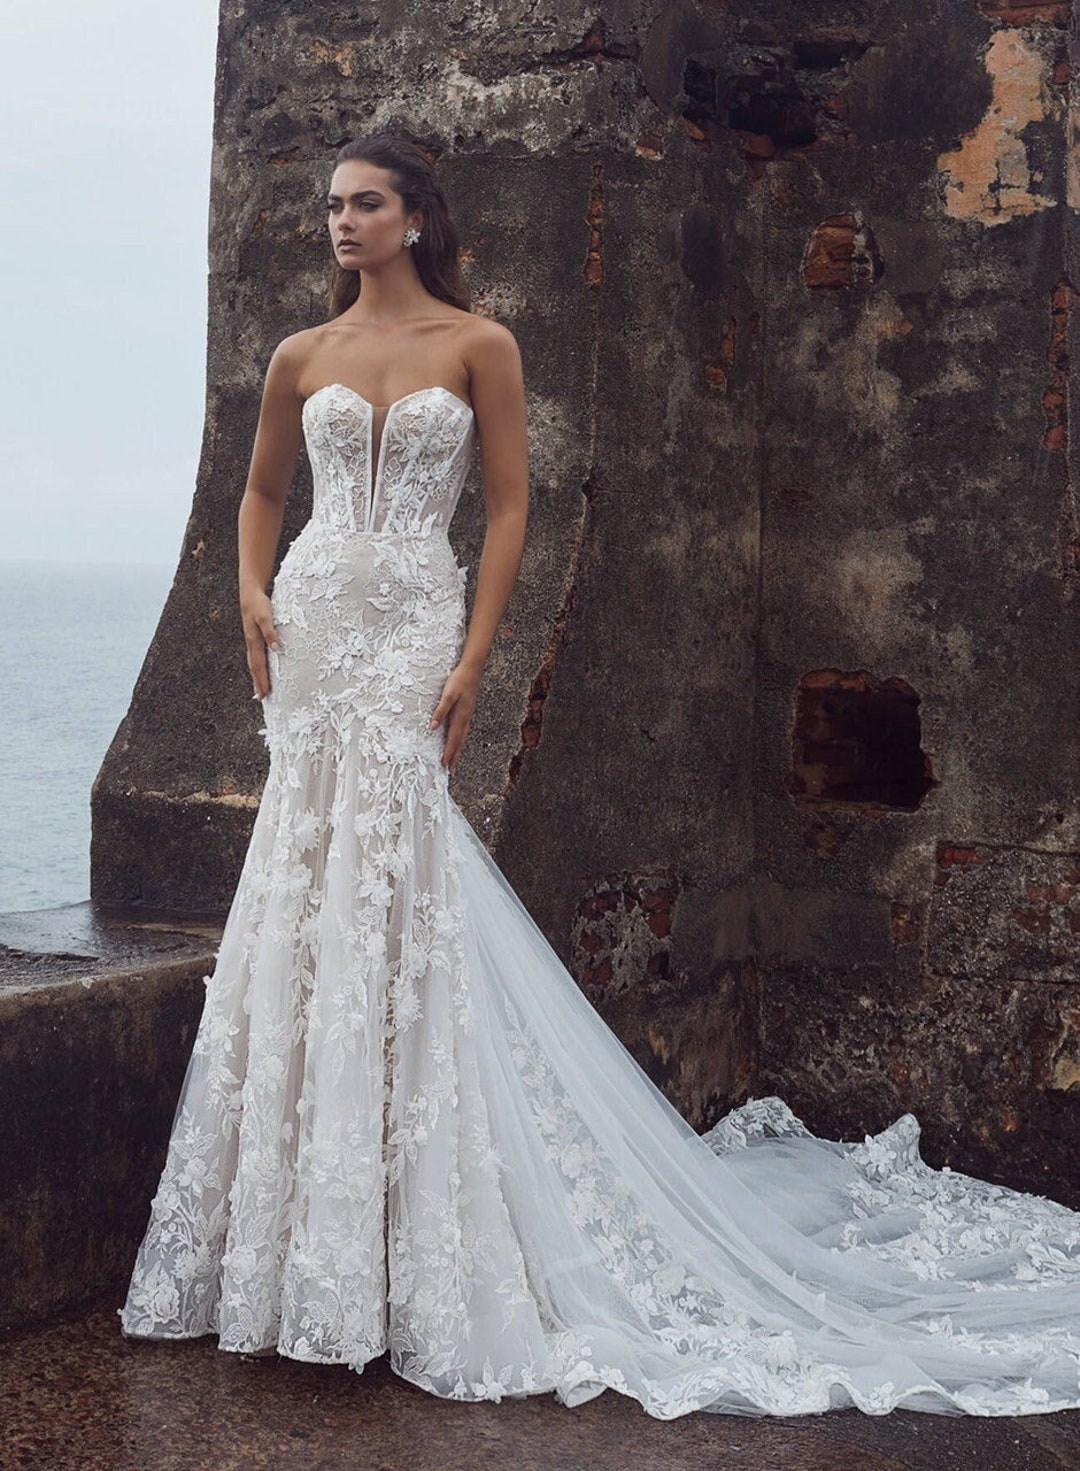 Corset Wedding Dress With Soft Tulle mermaid Wedding Dress - Etsy